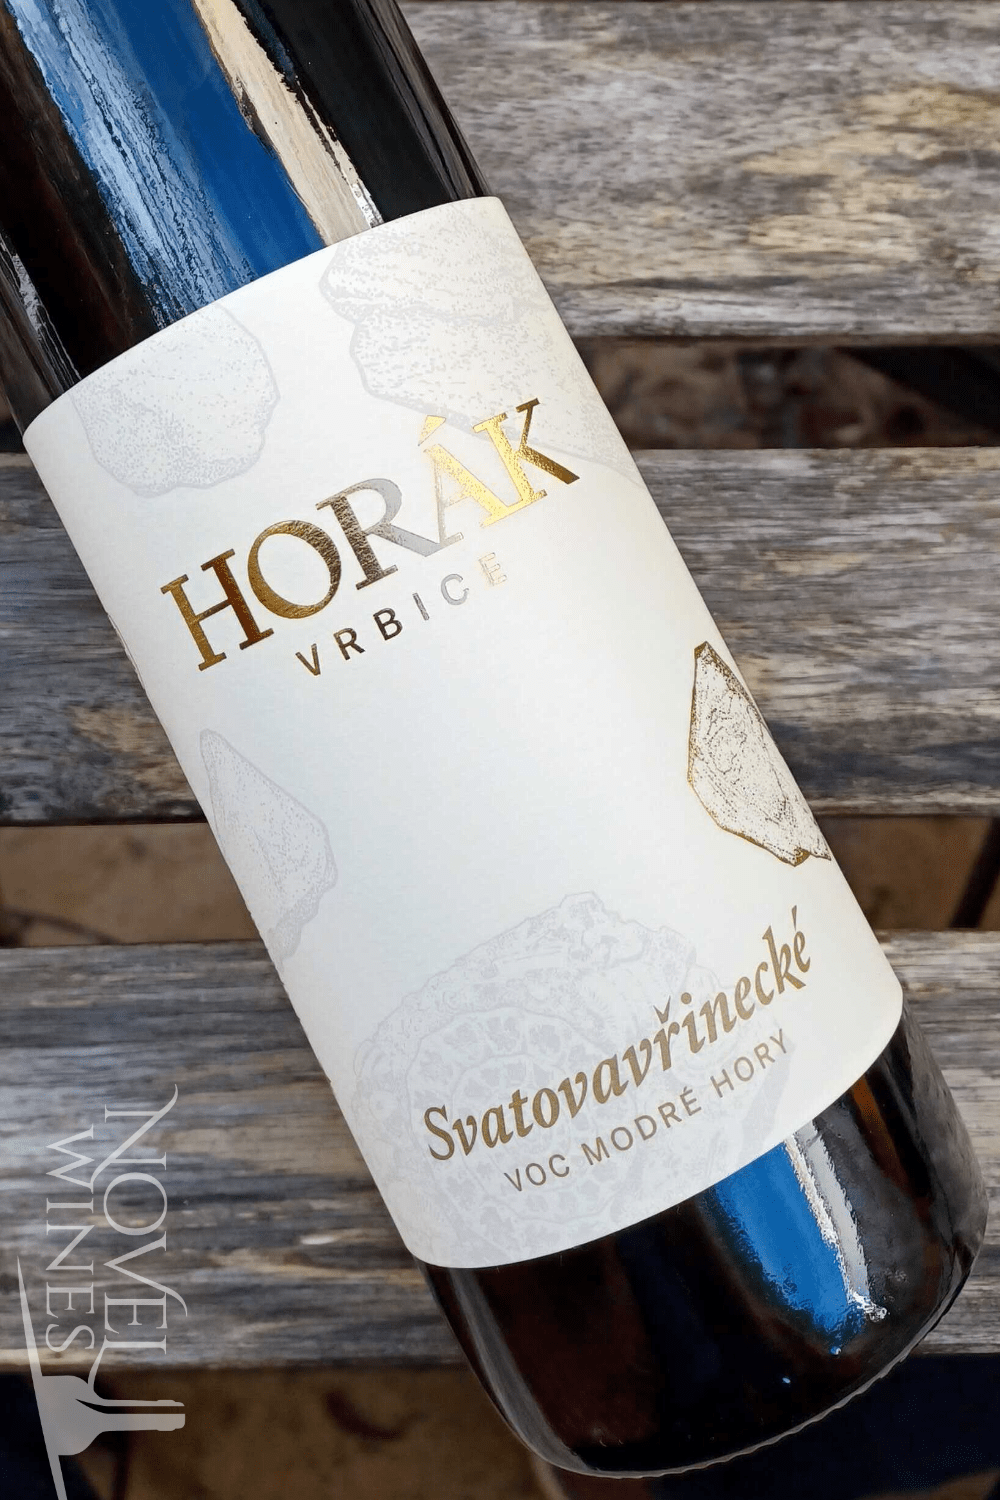 Horak Red Wine Horák Svatovavinecke VOC Modra St Laurent 2018, Czechia